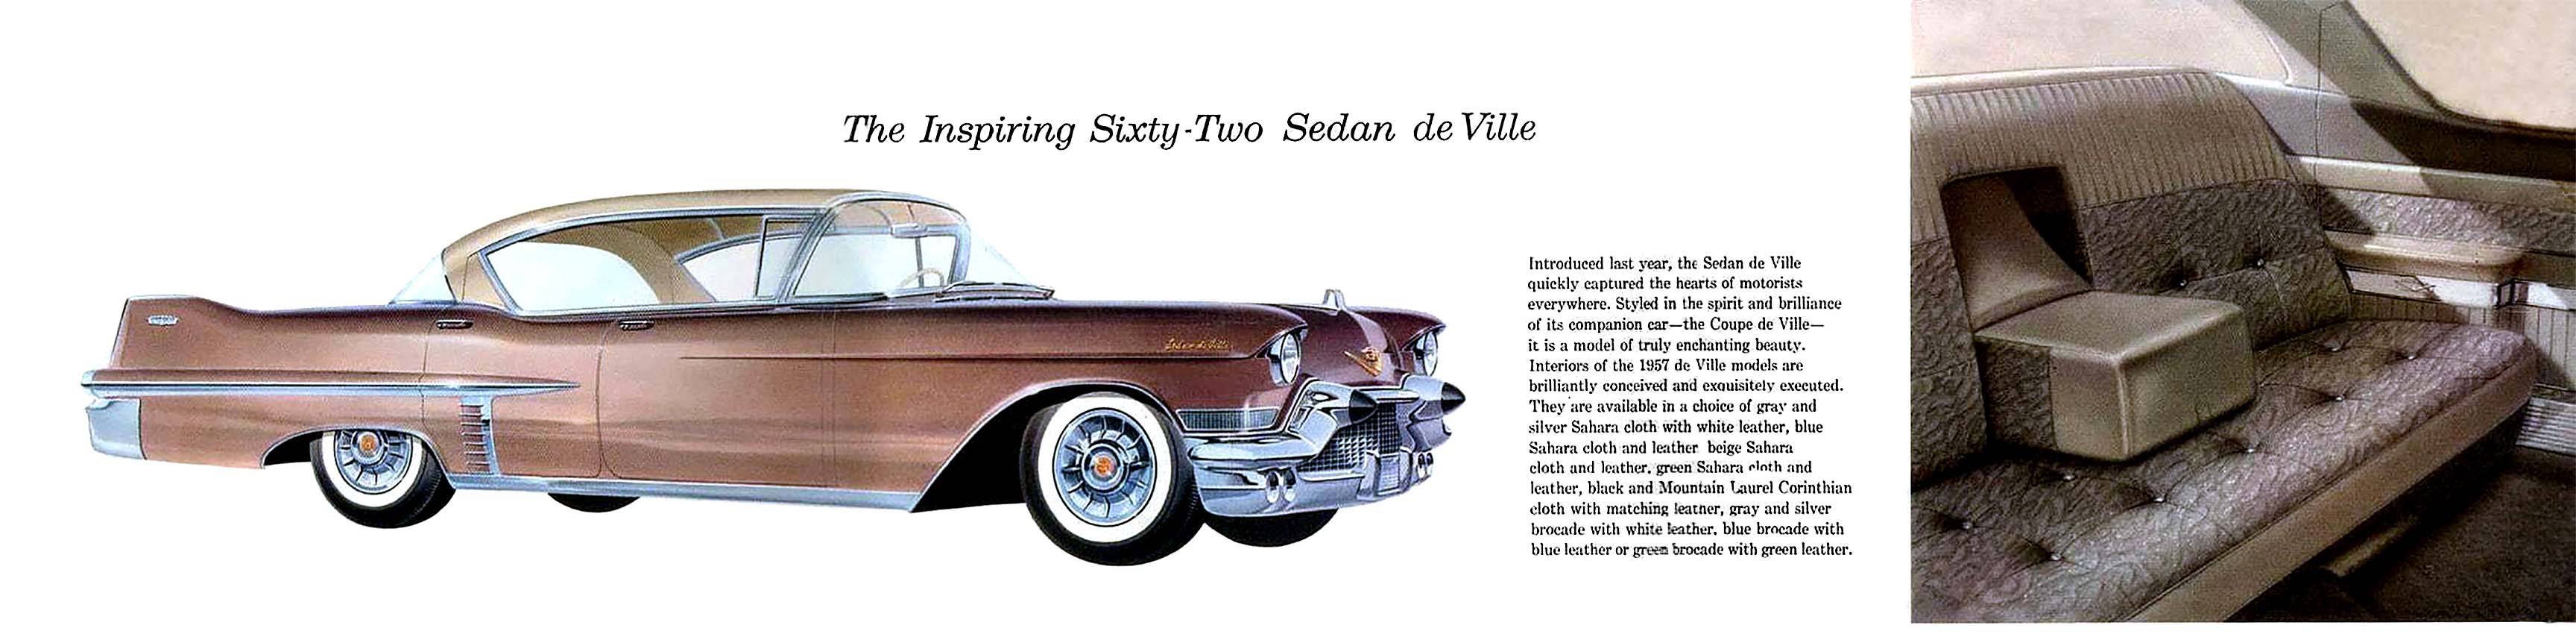 1957_Cadillac_Foldout-07